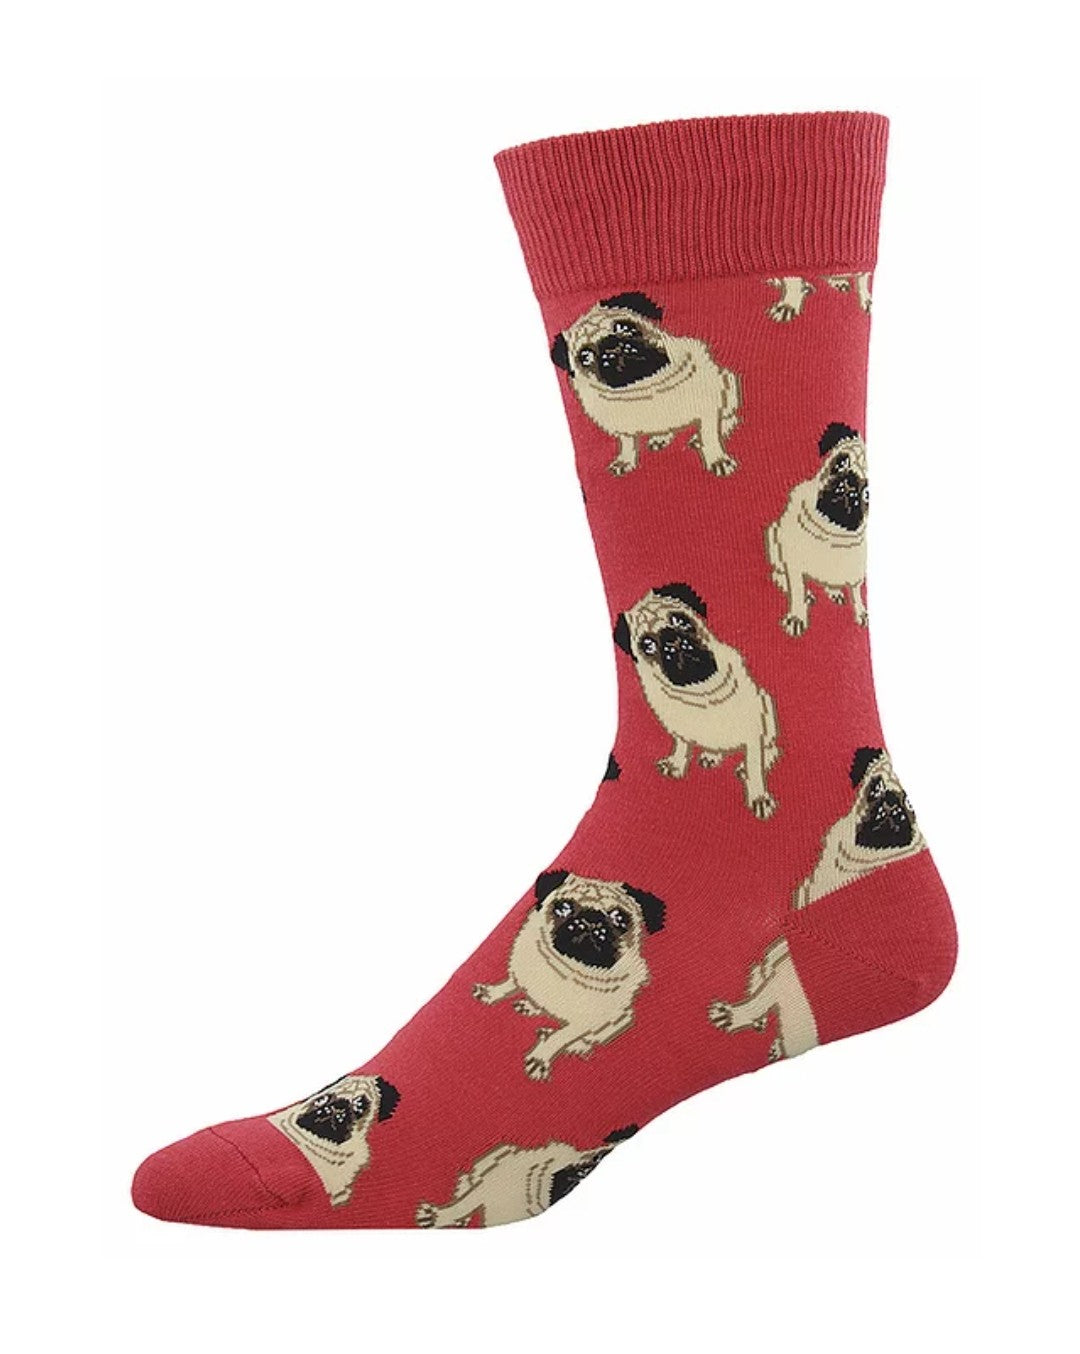 Socks - Mens - Pugs - Red